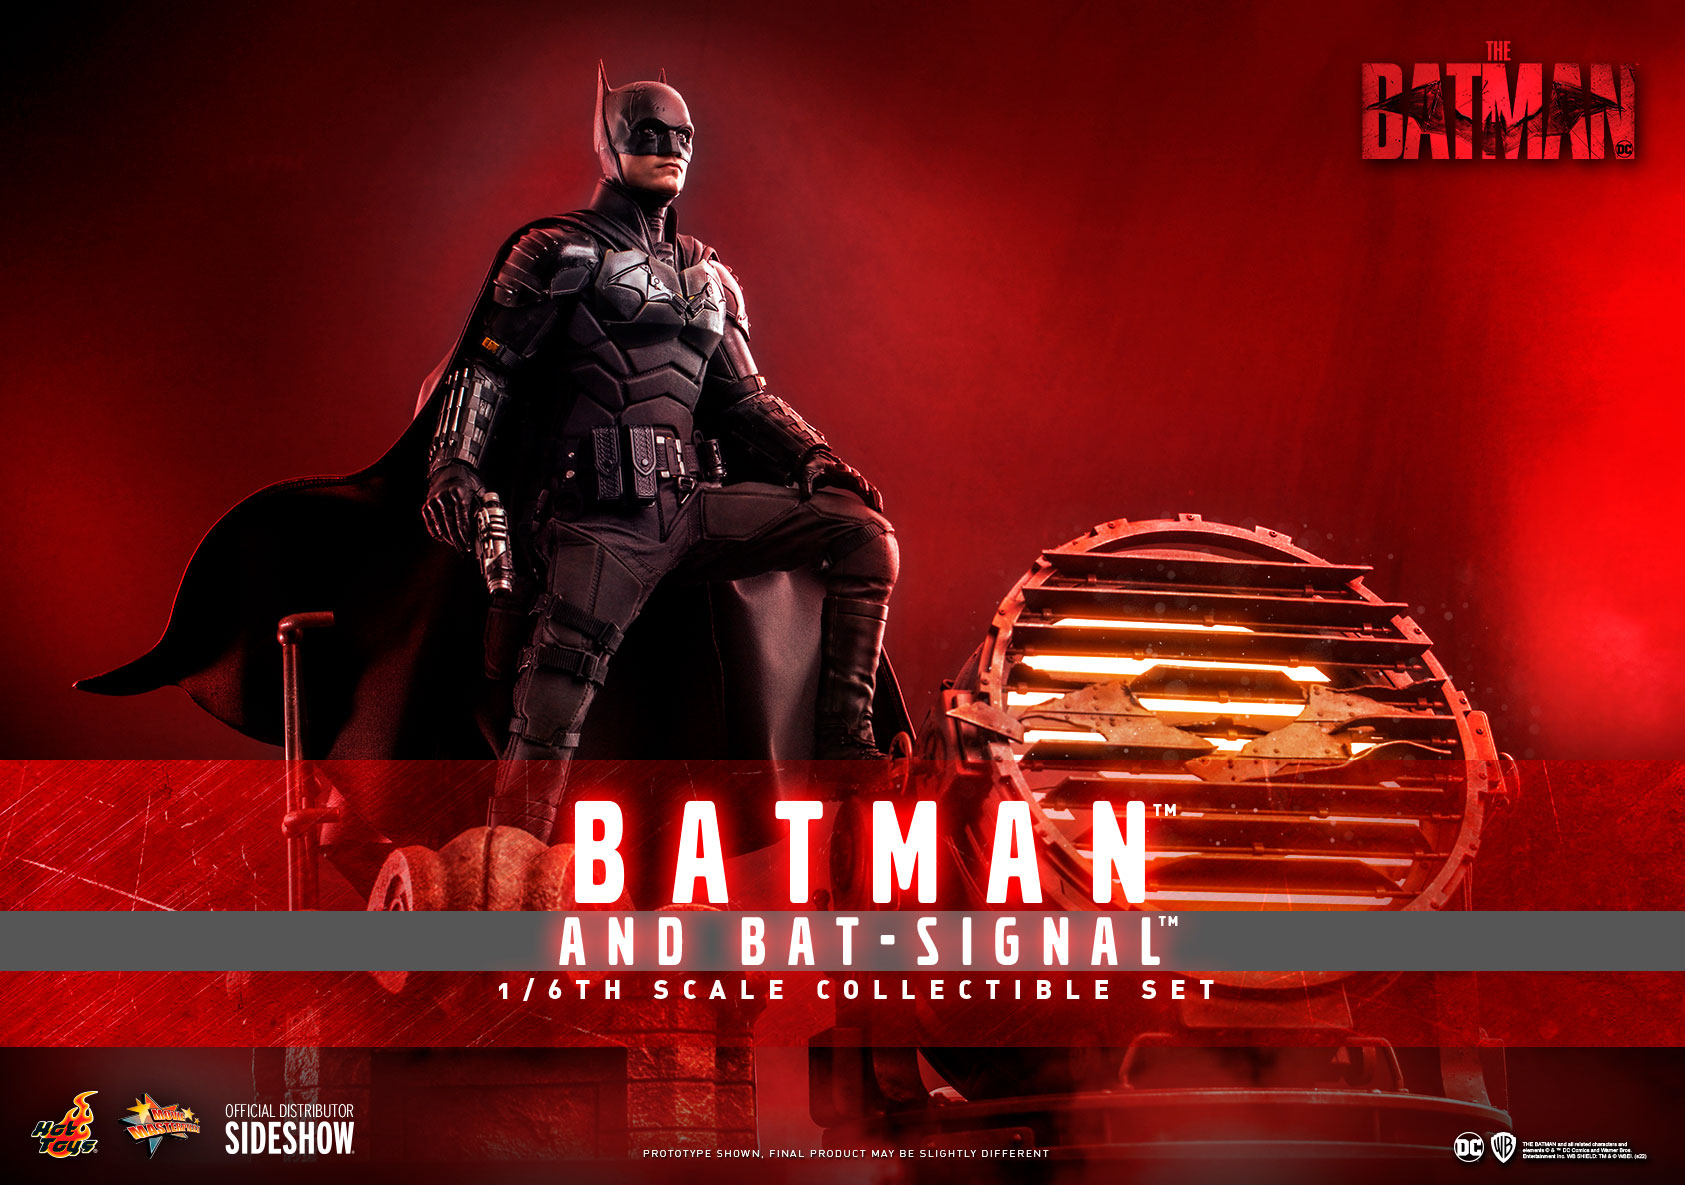 Batman and Bat-Signal Collectible Set - Movie Masterpiece Series - The Batman